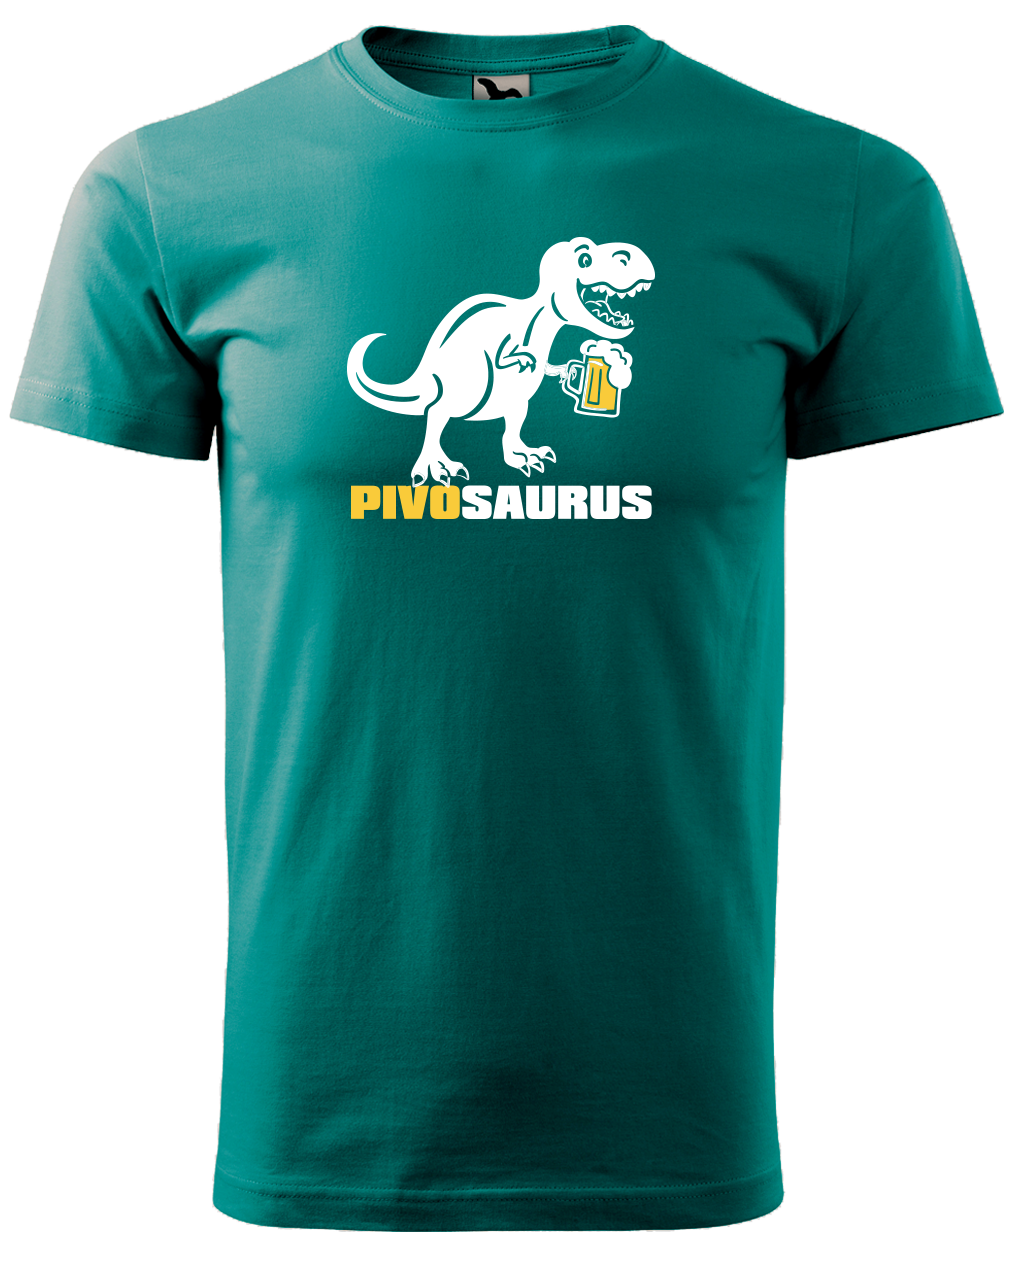 Vtipné tričko - Pivosaurus Velikost: XL, Barva: Emerald (19)